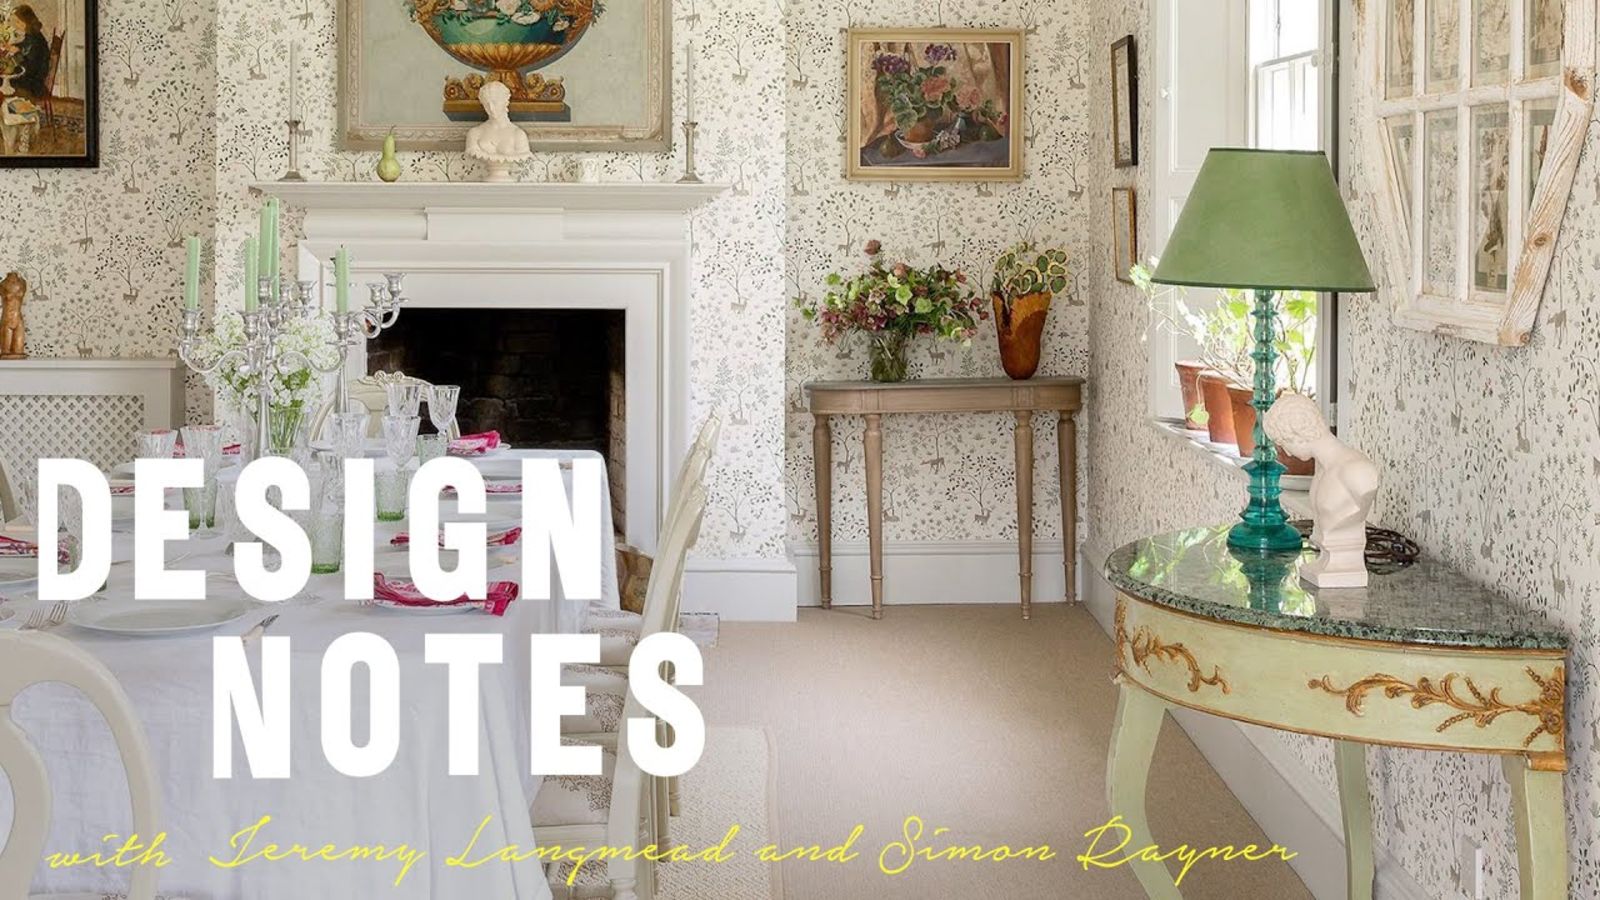 Inside Jeremy Langmead's singularly enchanting Suffolk house | Design Notes | House & Garden